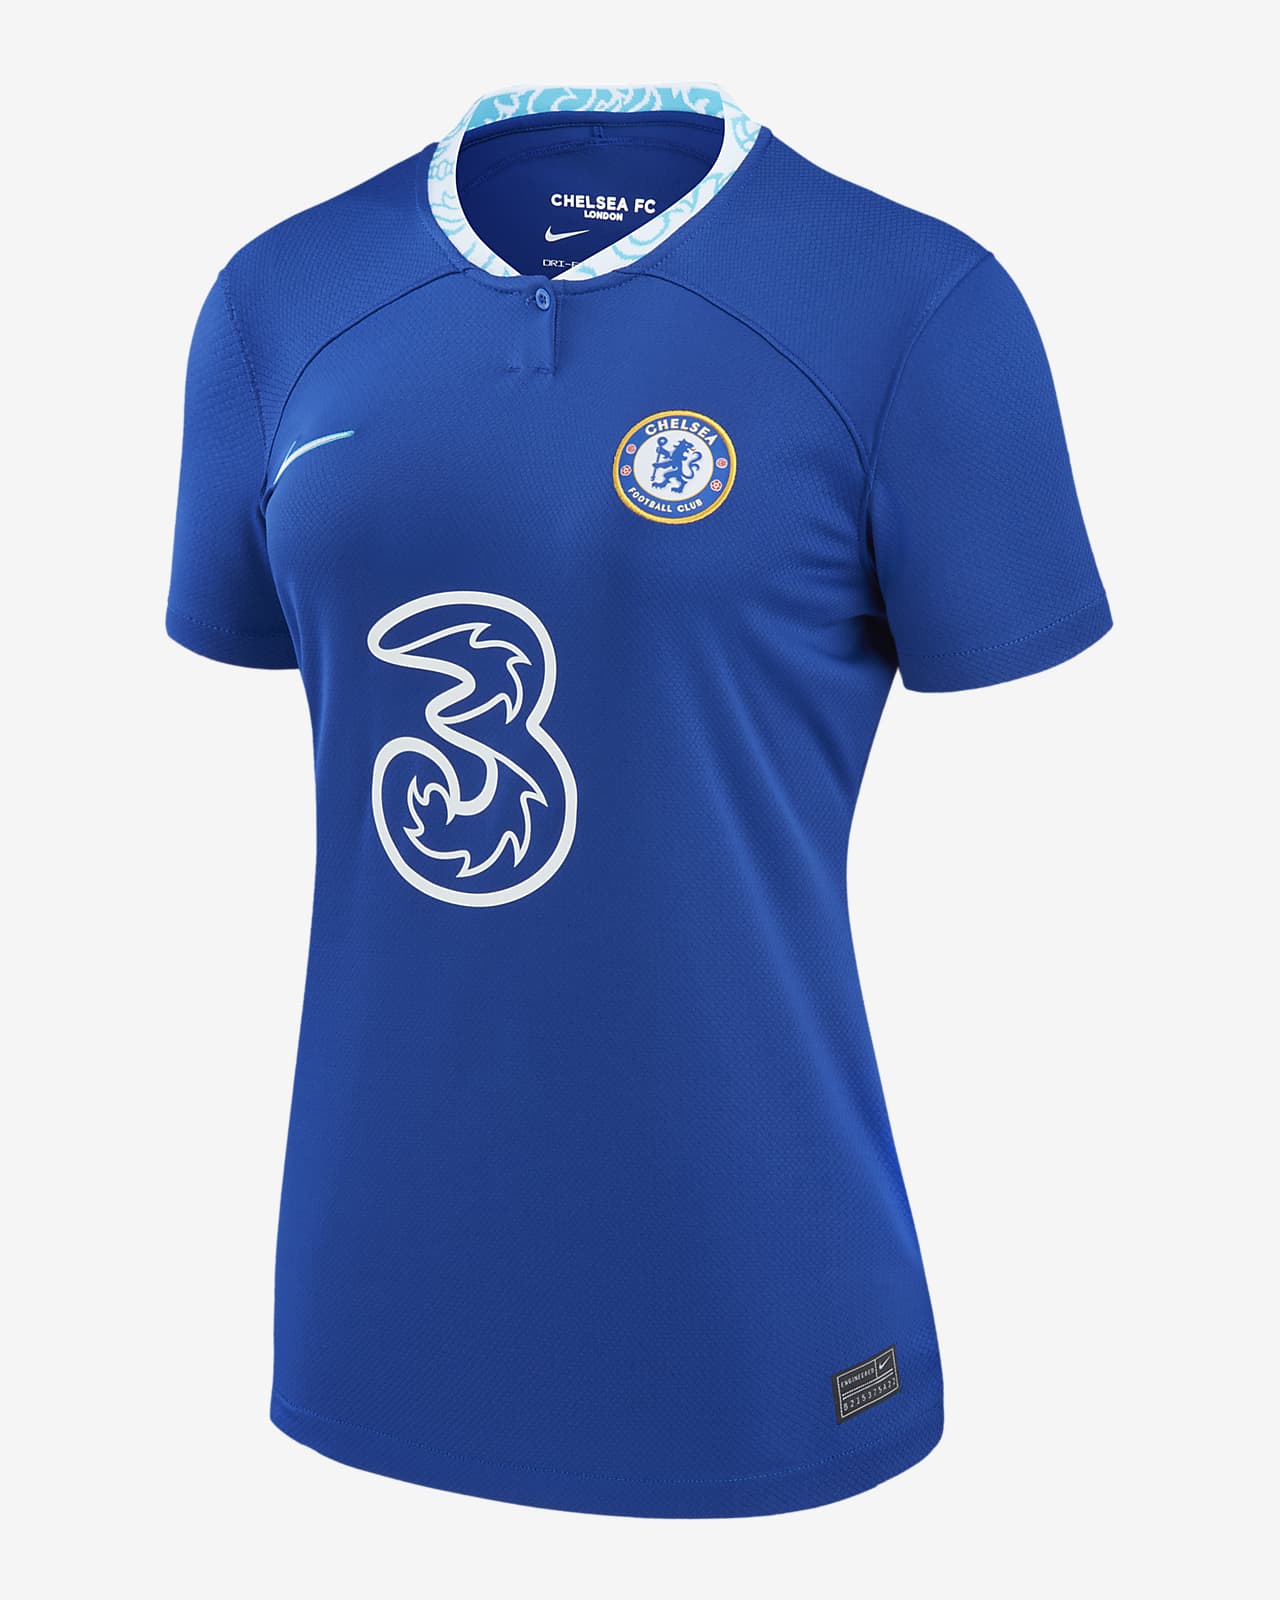 Jersey de fútbol Nike Dri-FIT para mujer del Chelsea local (Kai 2022/23 Stadium. Nike.com